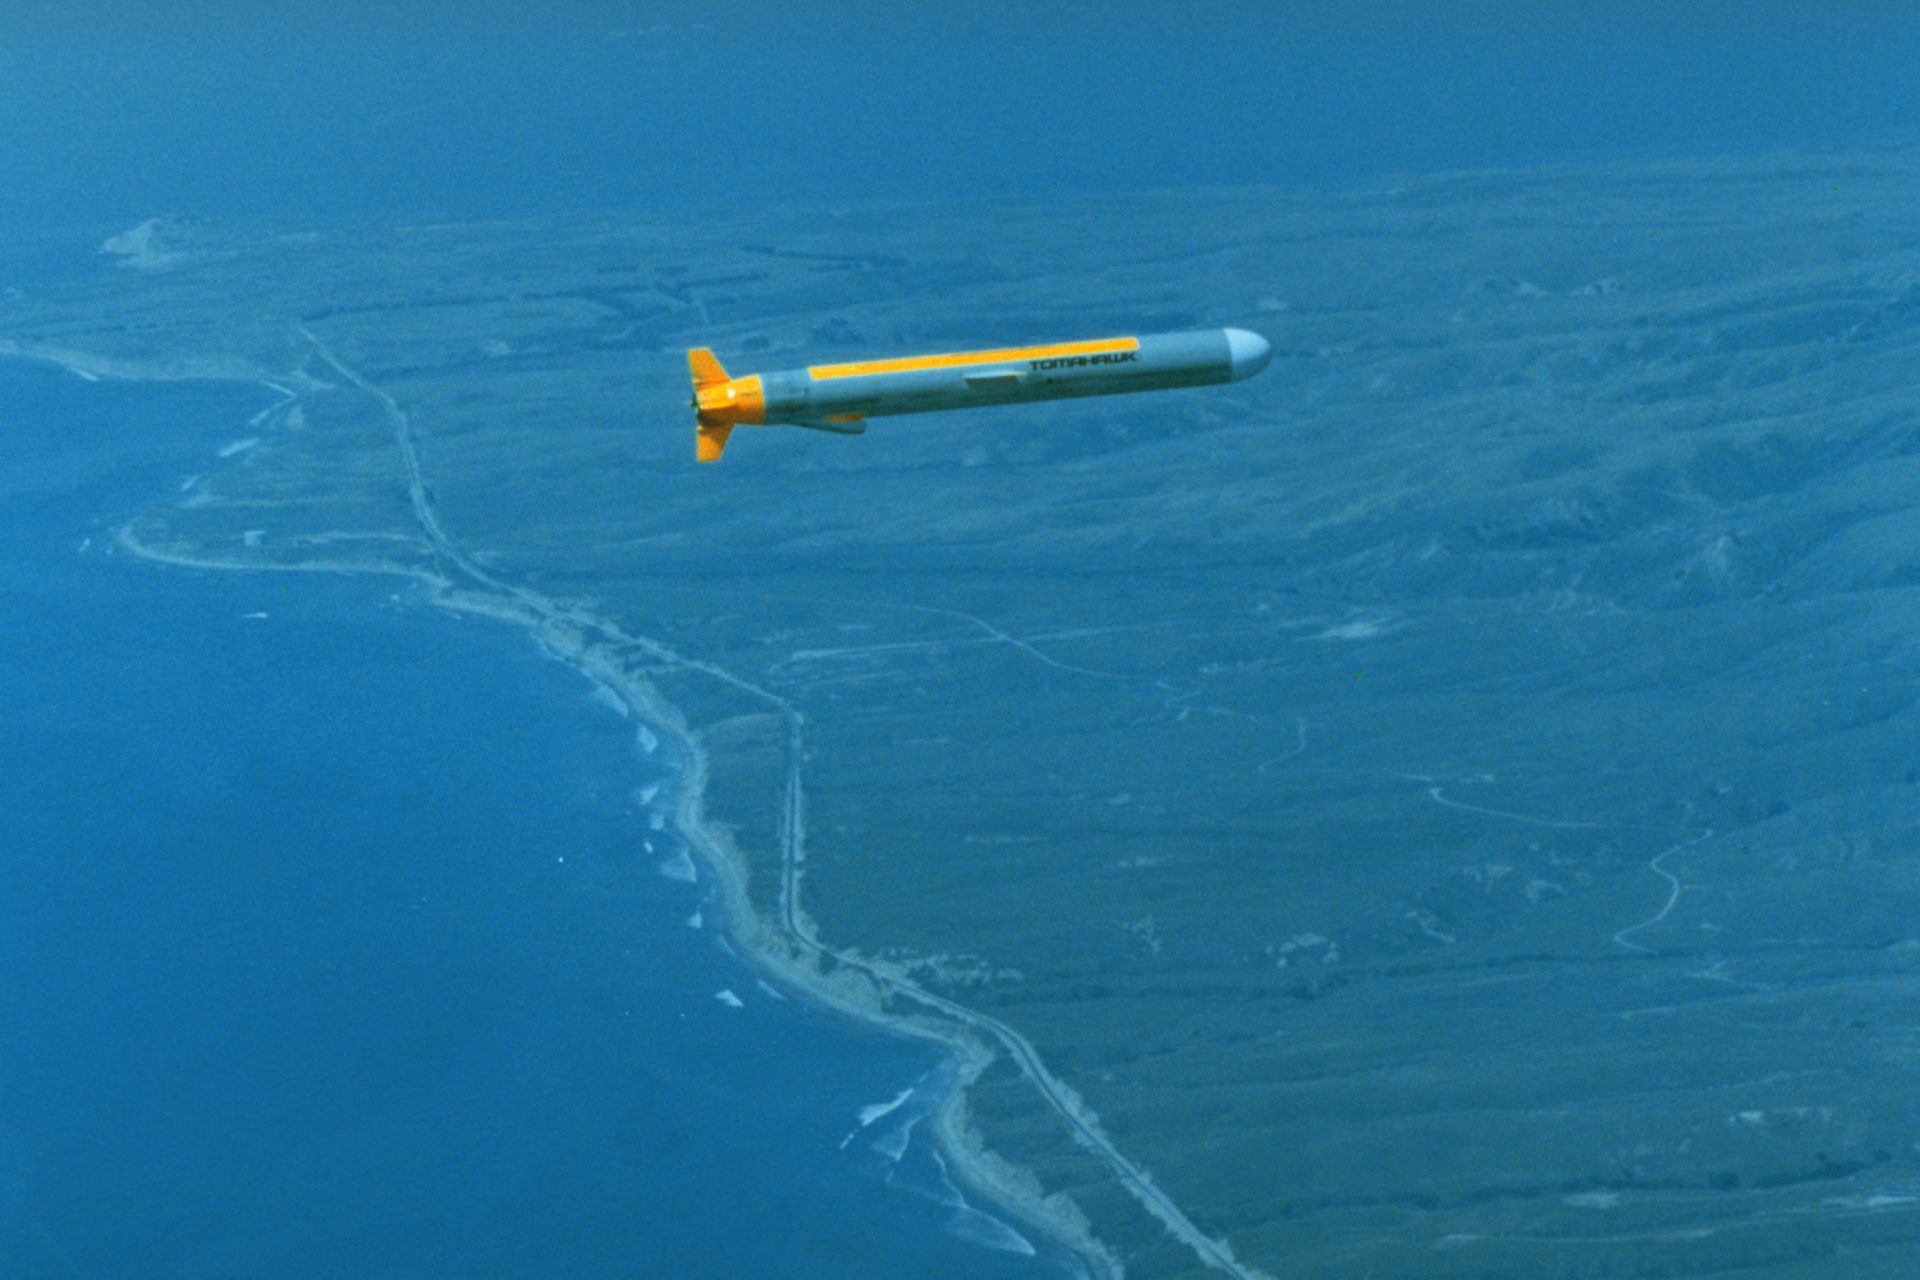 Le missile d'attaque terrestre Tomahawk